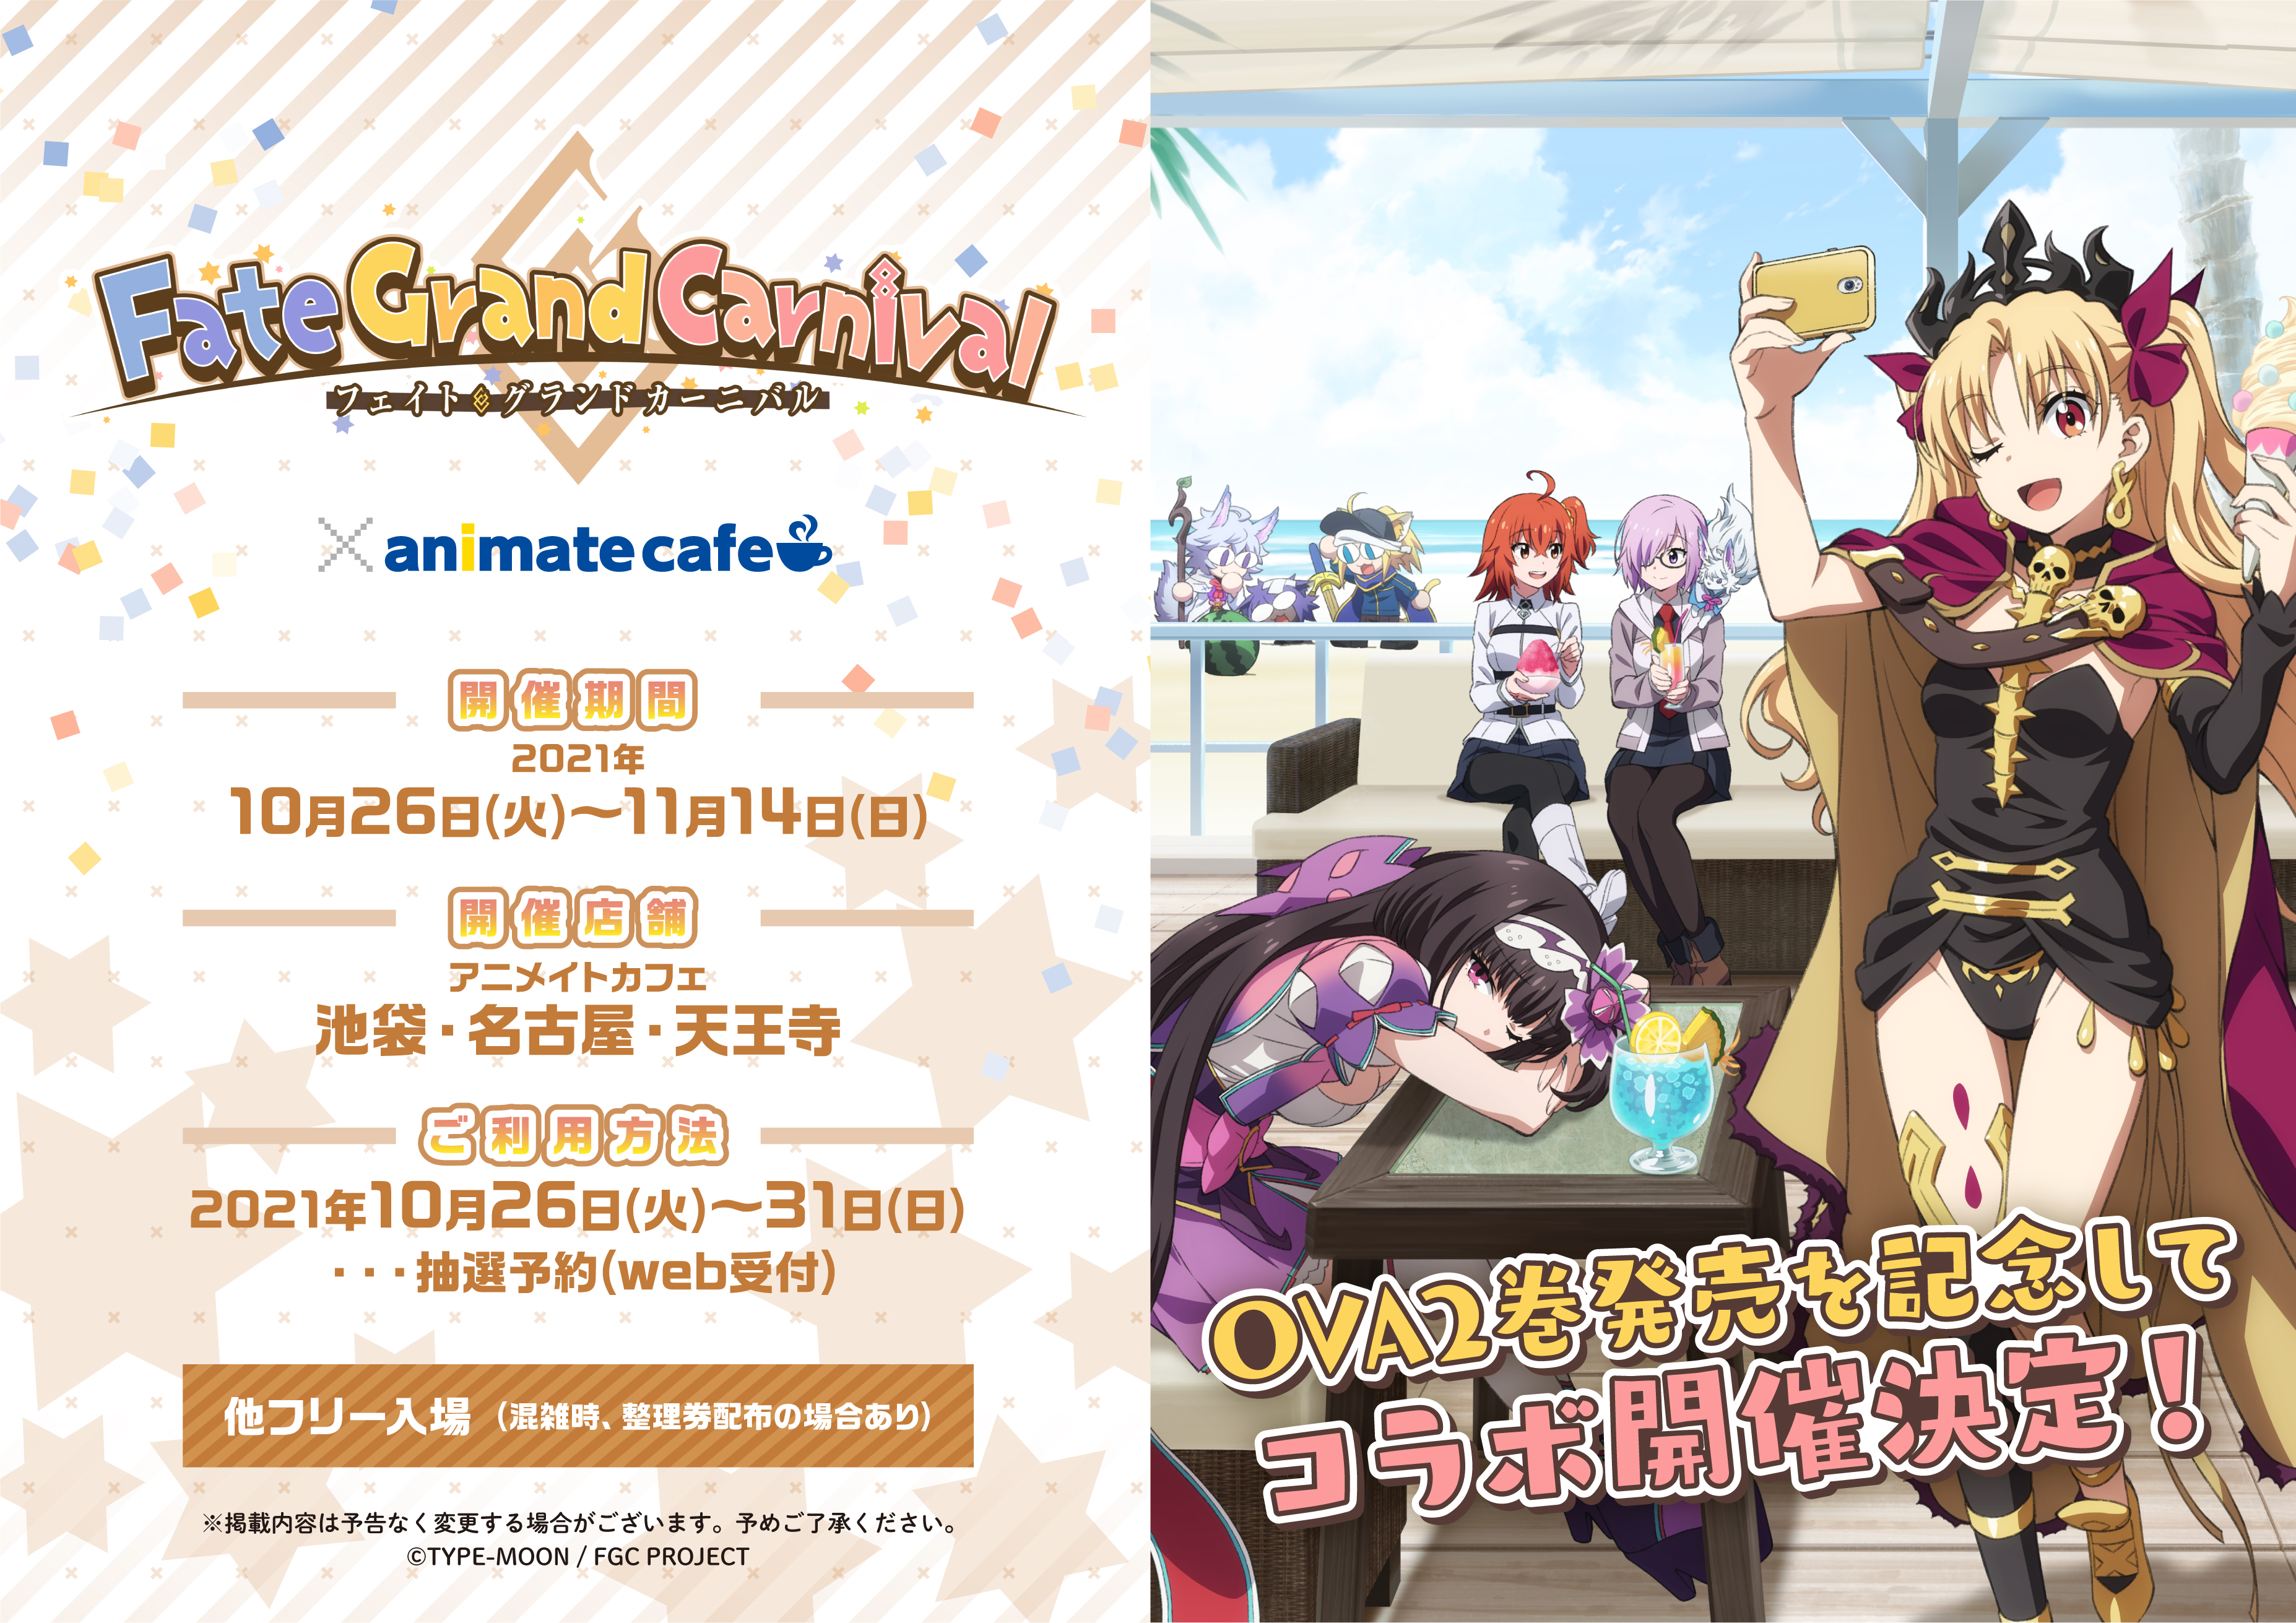 Fate Grand Carnival コラボレーションカフェがアニメイトカフェ池袋 名古屋 天王寺で開催決定 株式会社アニメイト ホールディングスのプレスリリース